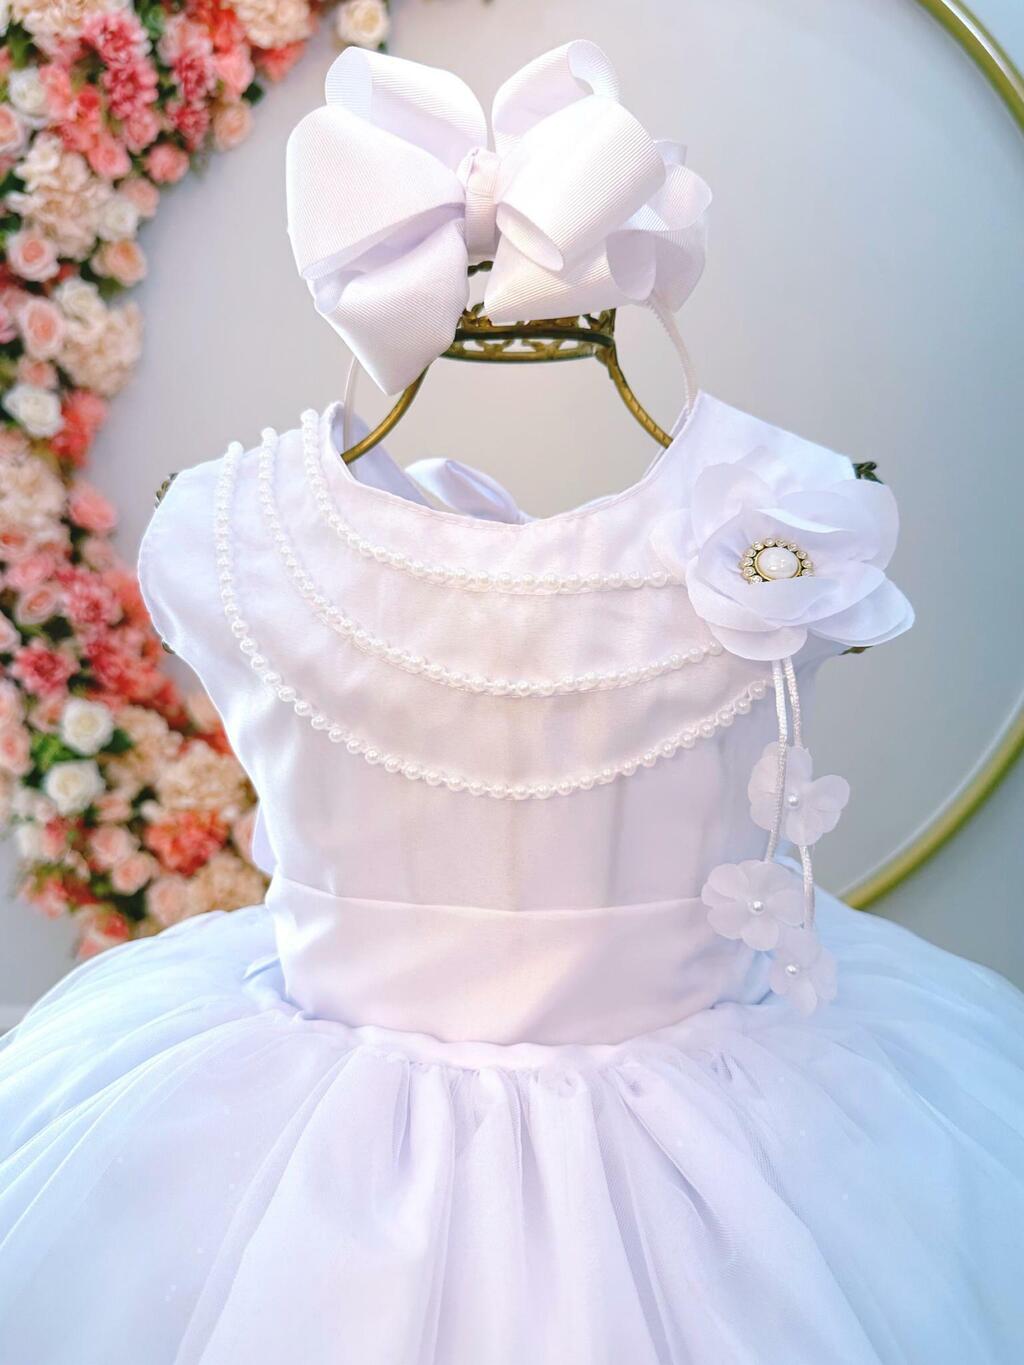 Vestido Infantil Branco Damas de Honra Casamentos C/ Broche